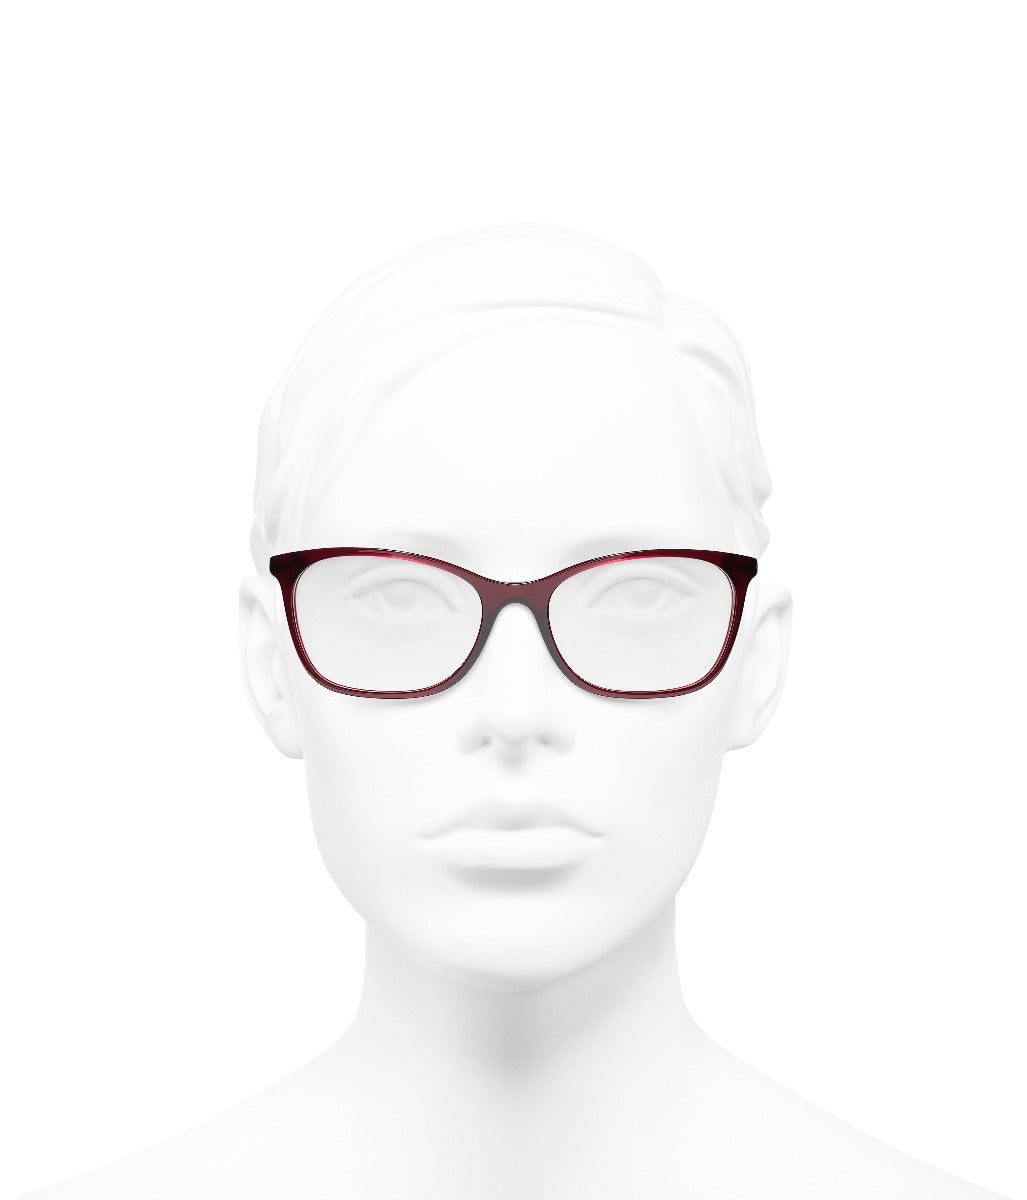 Chanel 3410-C714 Square Eyeglasses Optical Cateyes